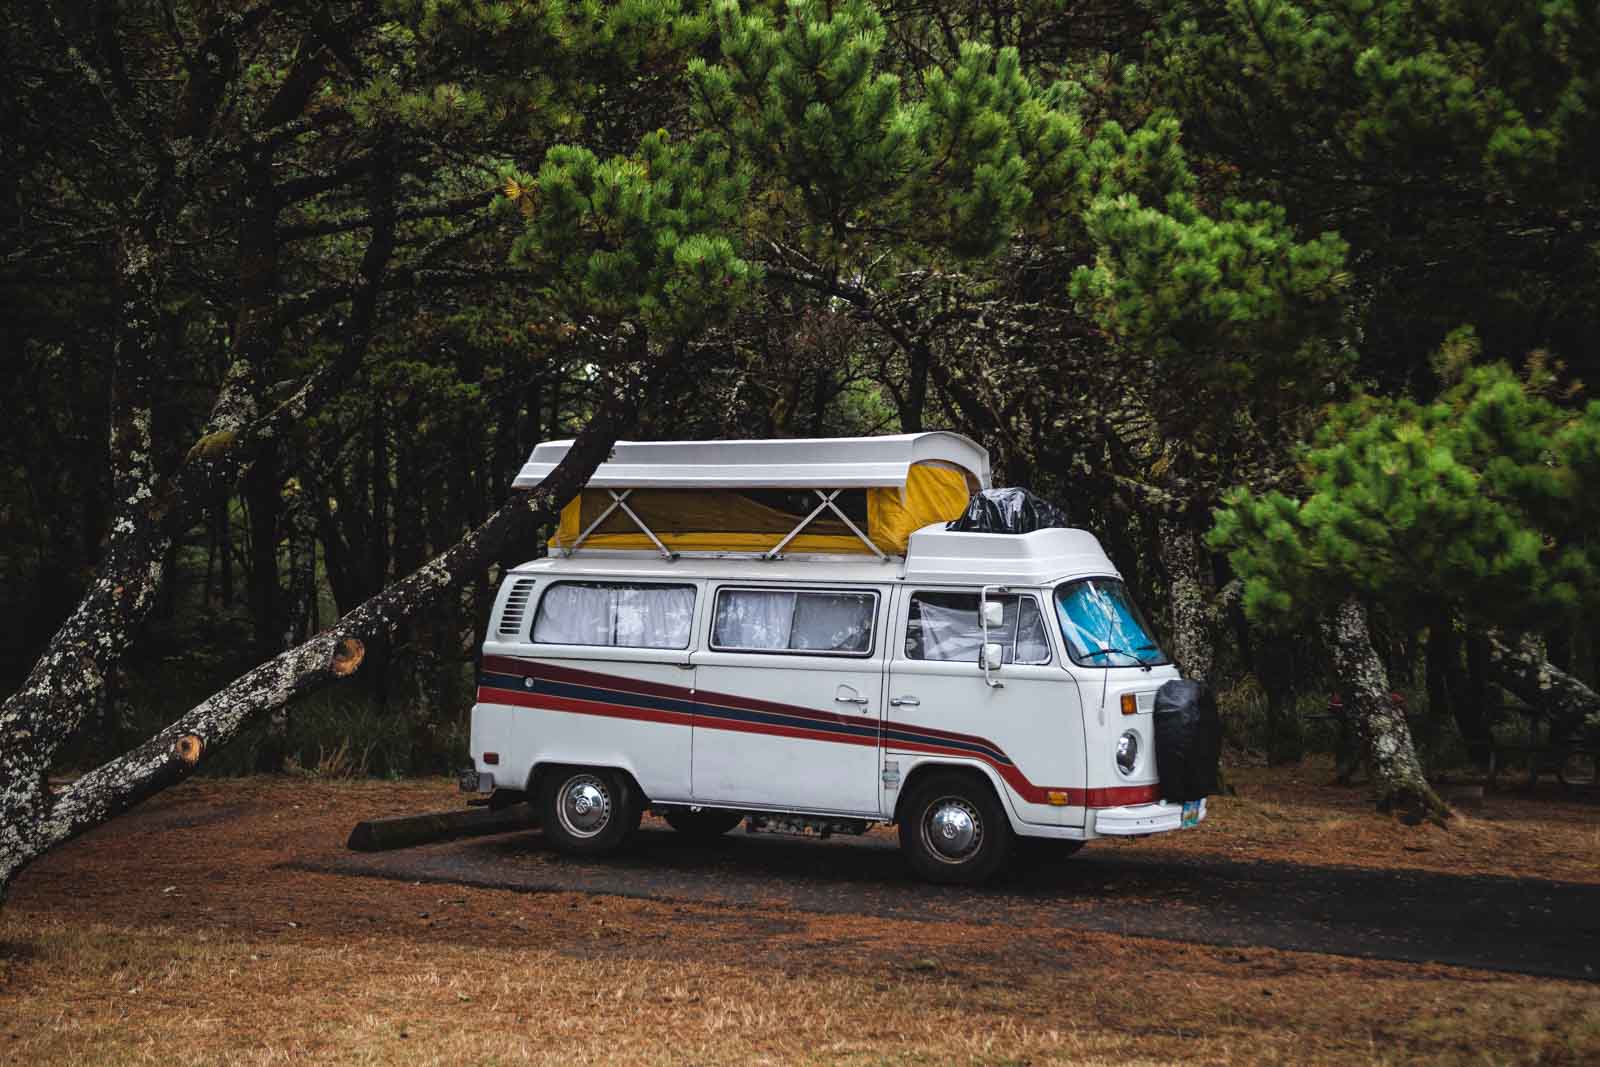 VW van at Nehalem Bay State Park Campground.